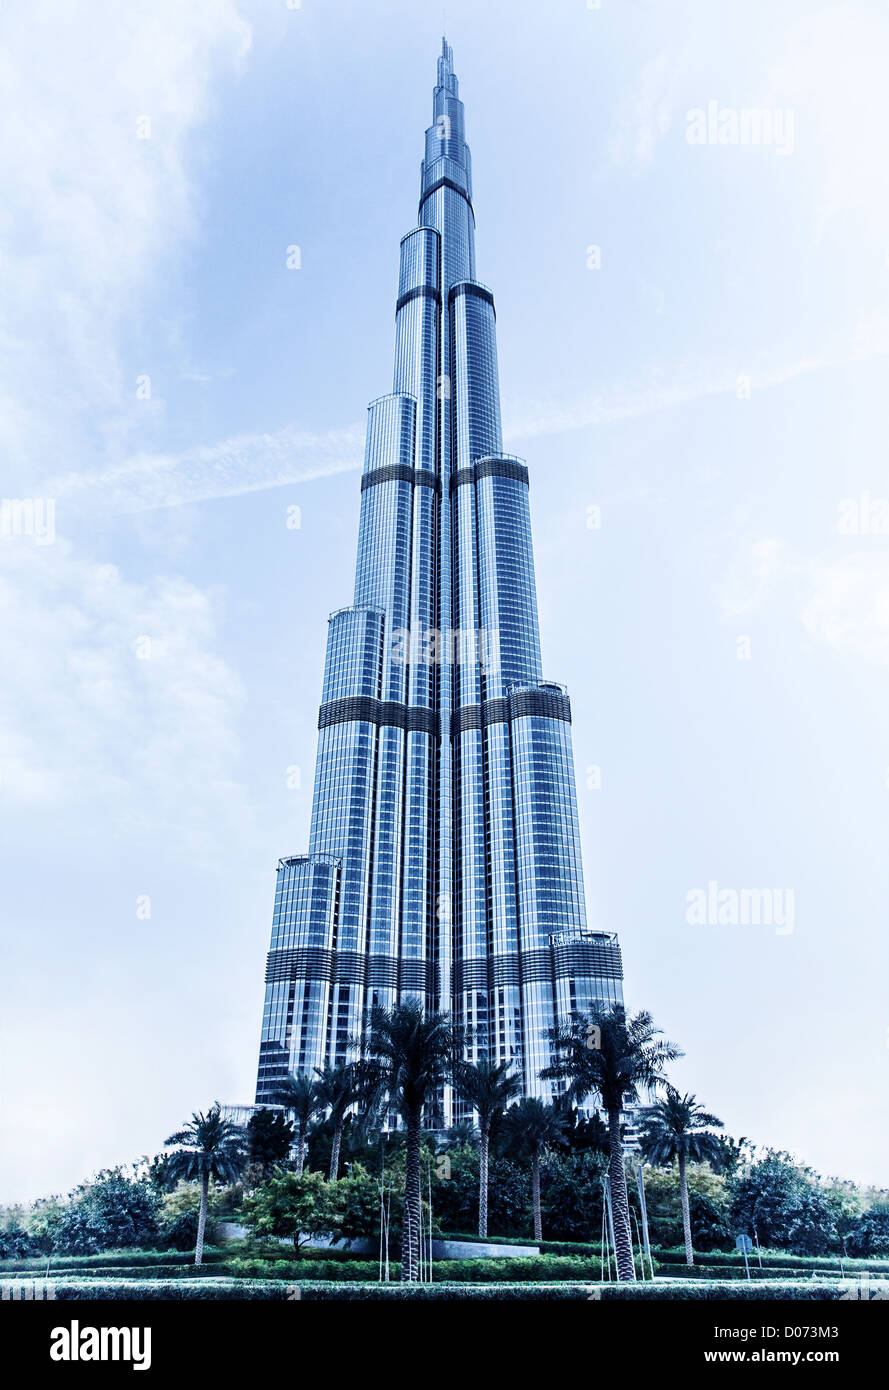 DUBAI, UAE - FEBRUARY 16: Burj Khalifa - world's tallest tower in the world at 828m, located in Downtown Dubai, Burj Dubai Stock Photo